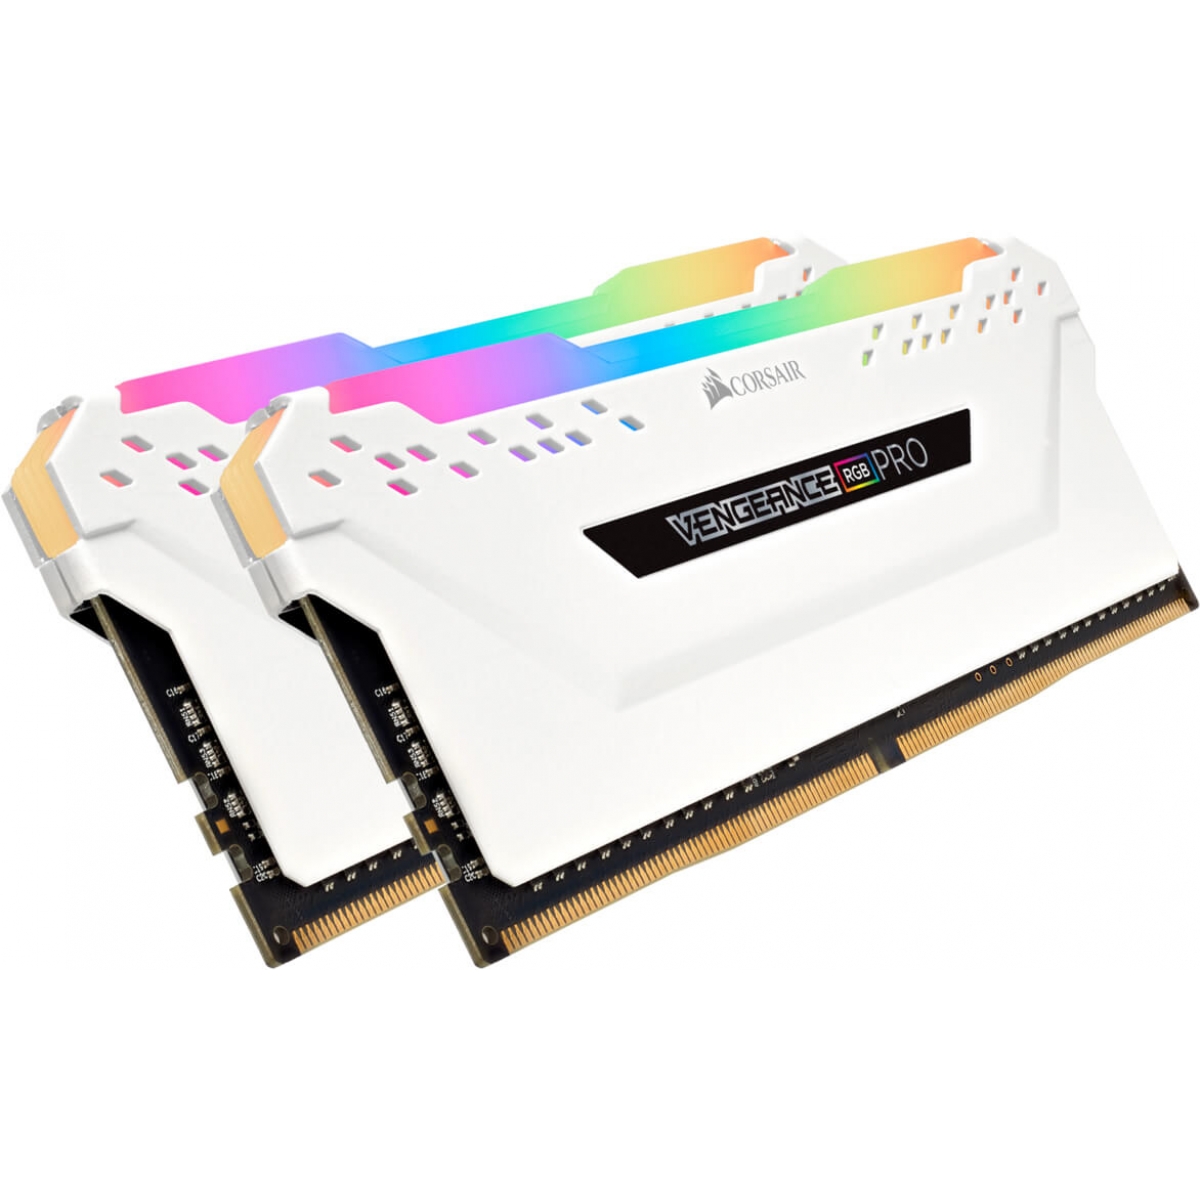 Memória DDR4 Corsair Vengeance PRO RGB 16GB (2x8GB) 2666MHz, White, CMW16GX4M2A2666C16W 